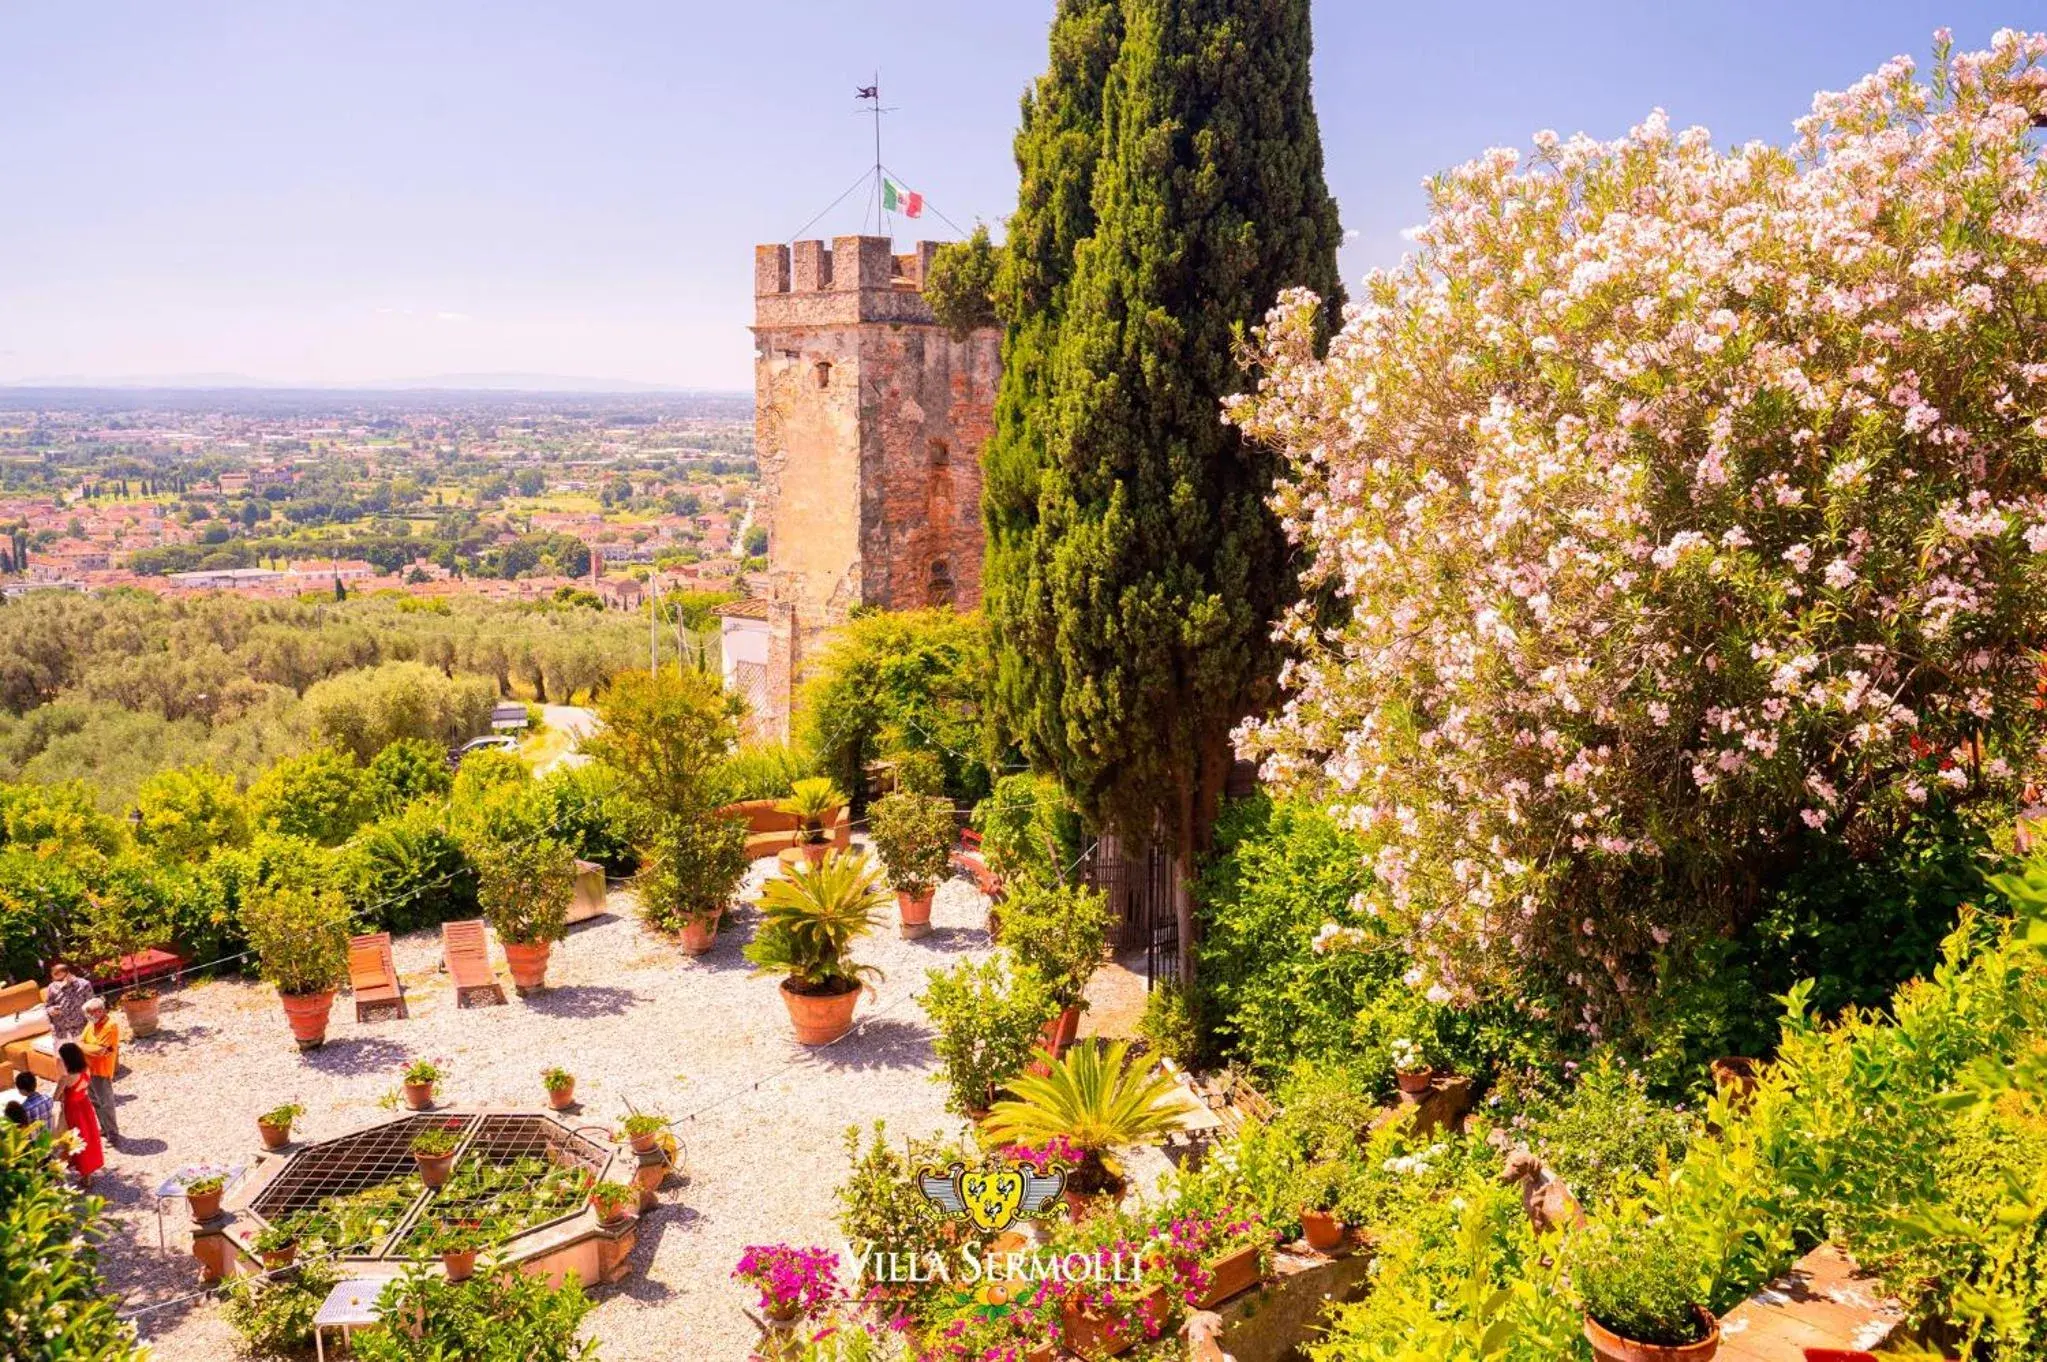 Garden in Hotel Villa Sermolli